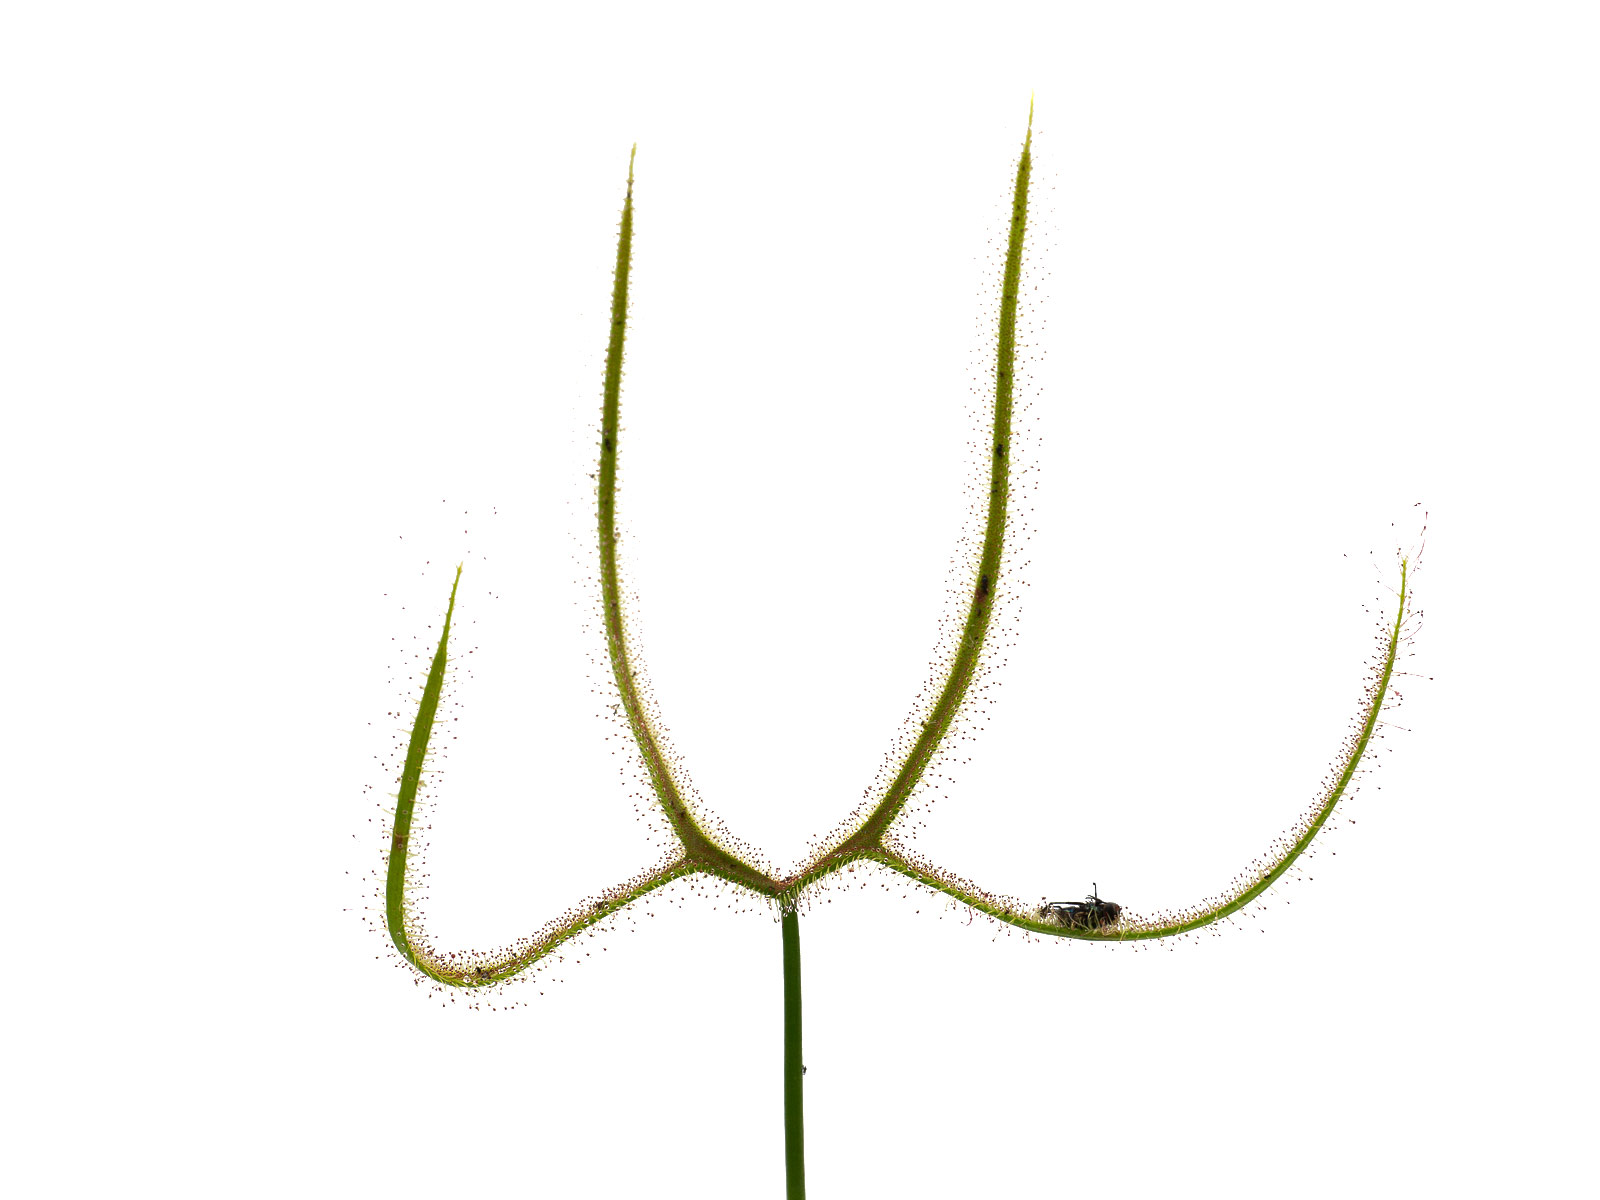 Drosera binata var. dichotoma - Giant form, 70cm tall